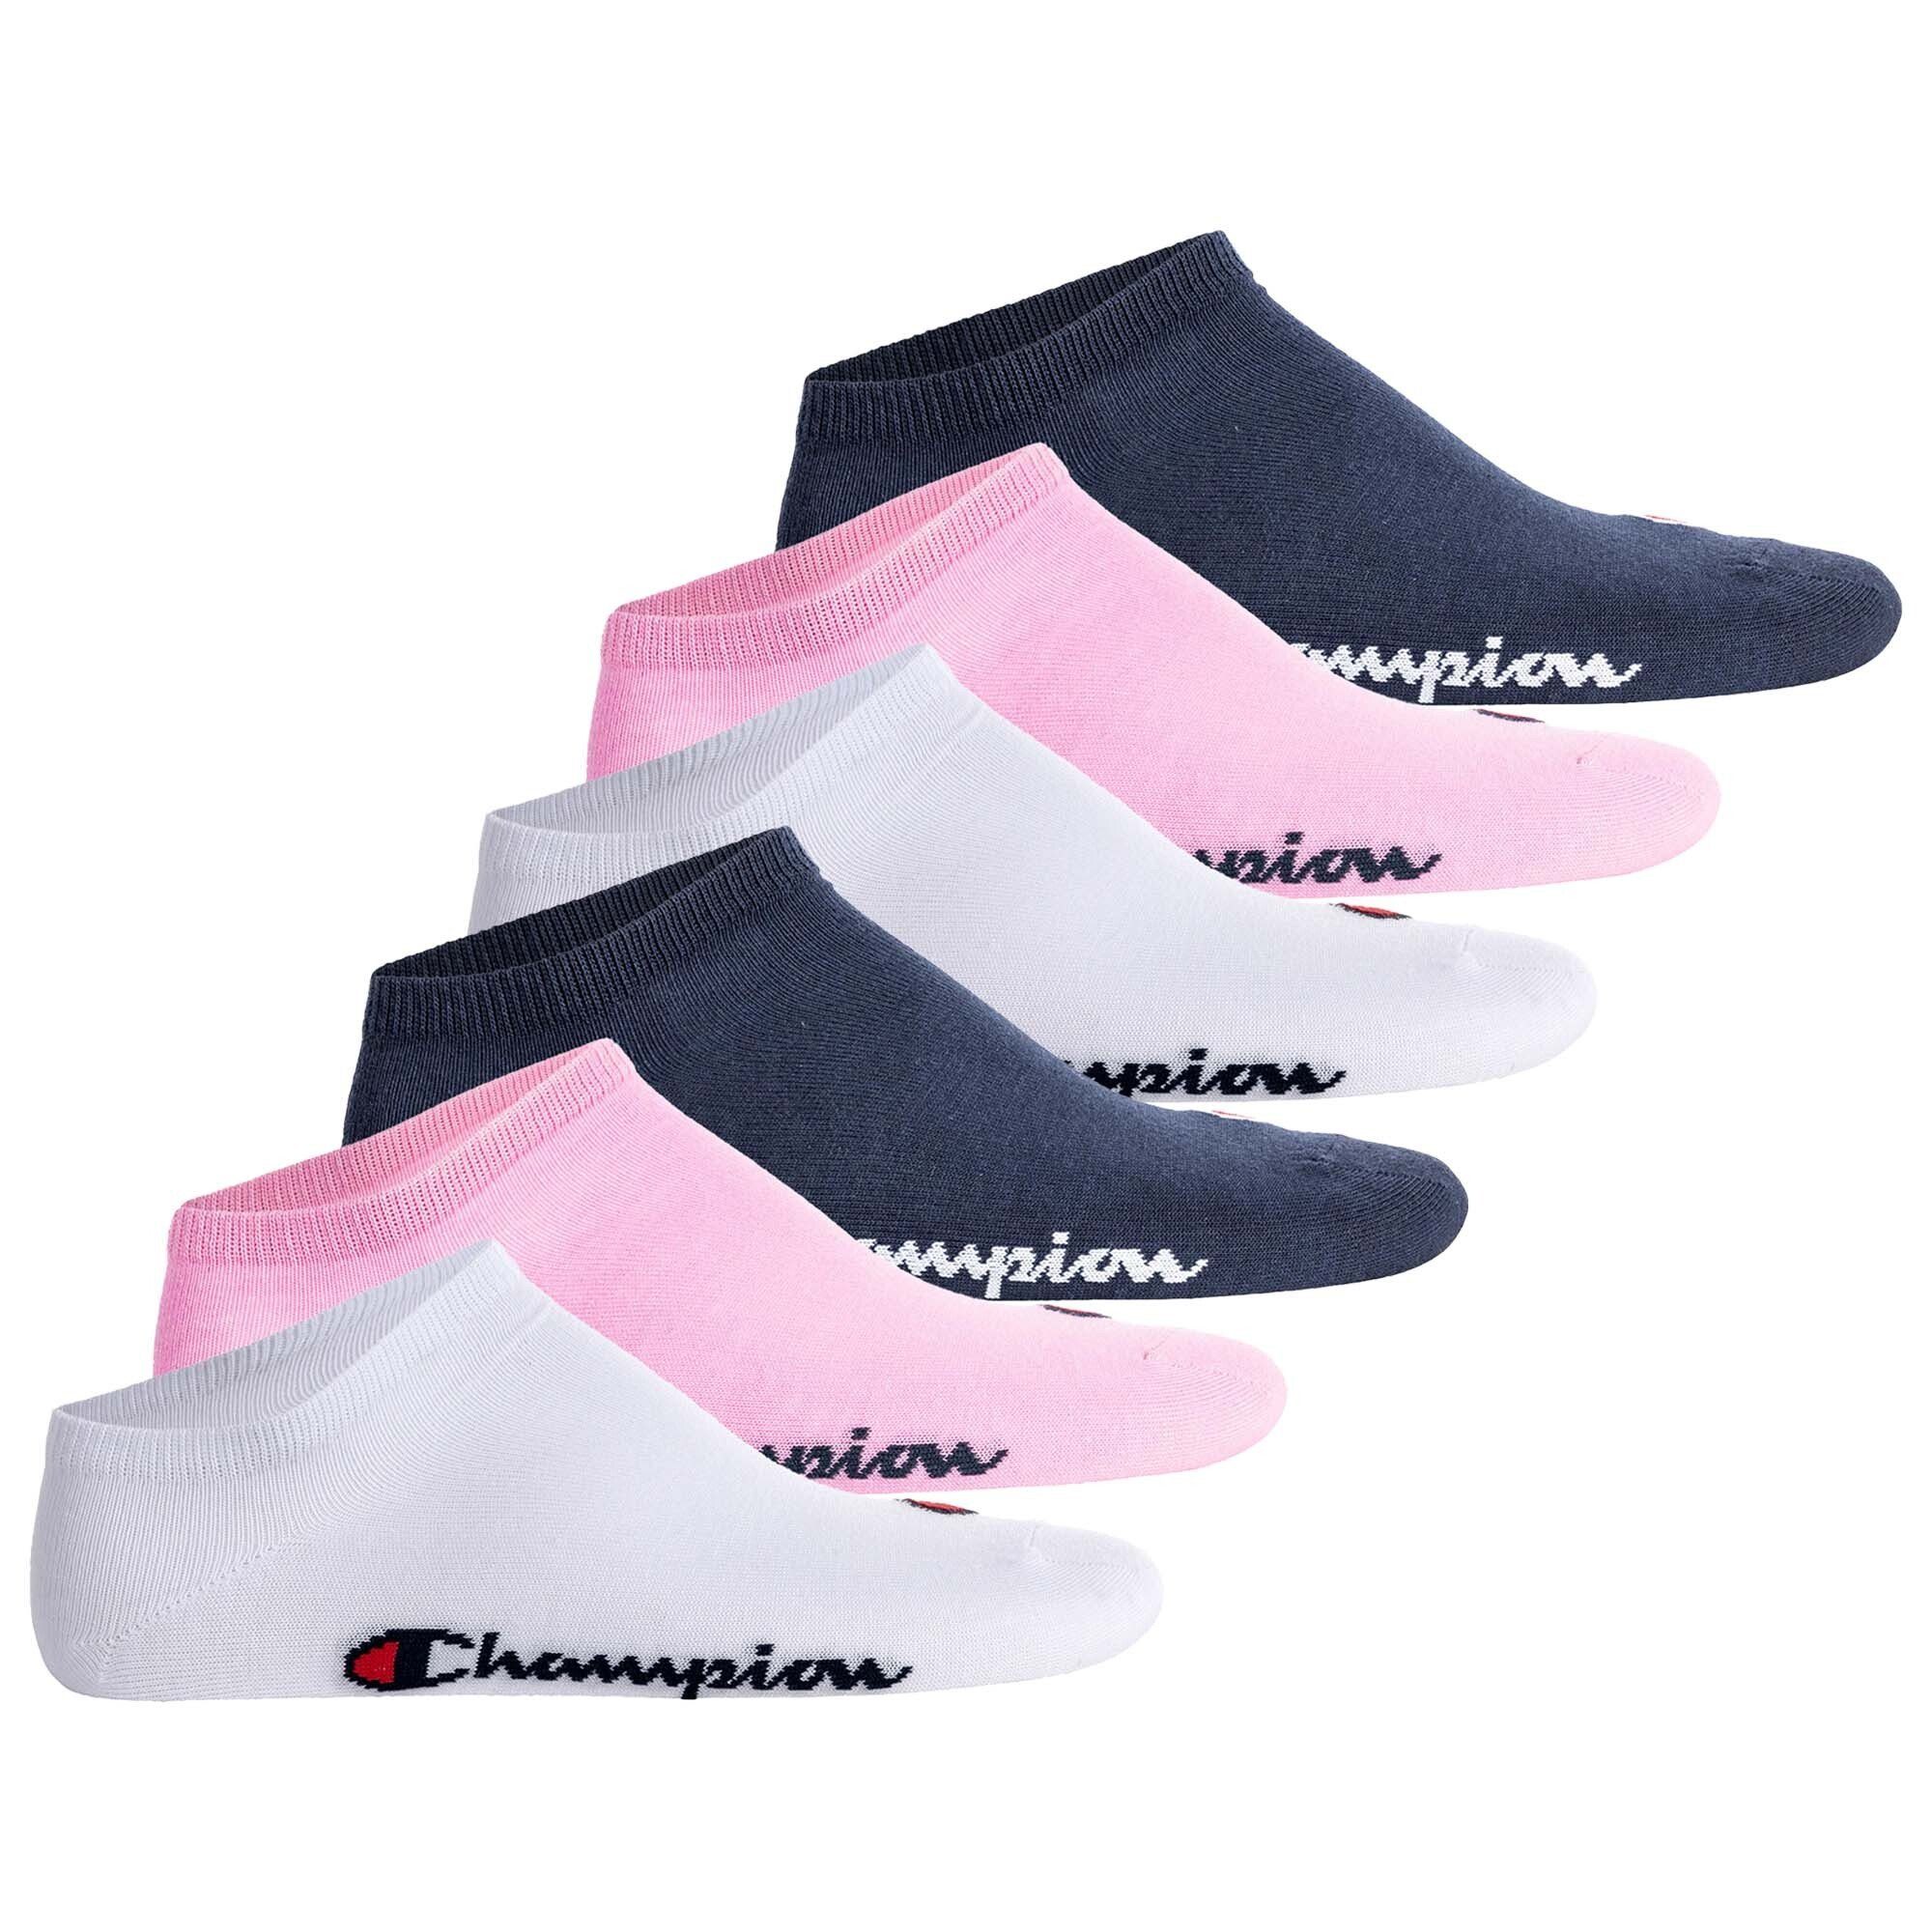 6 Sportsocken Socken, Basic - Unisex Crew Paar Rosa/Weiß/Blau Socken Champion